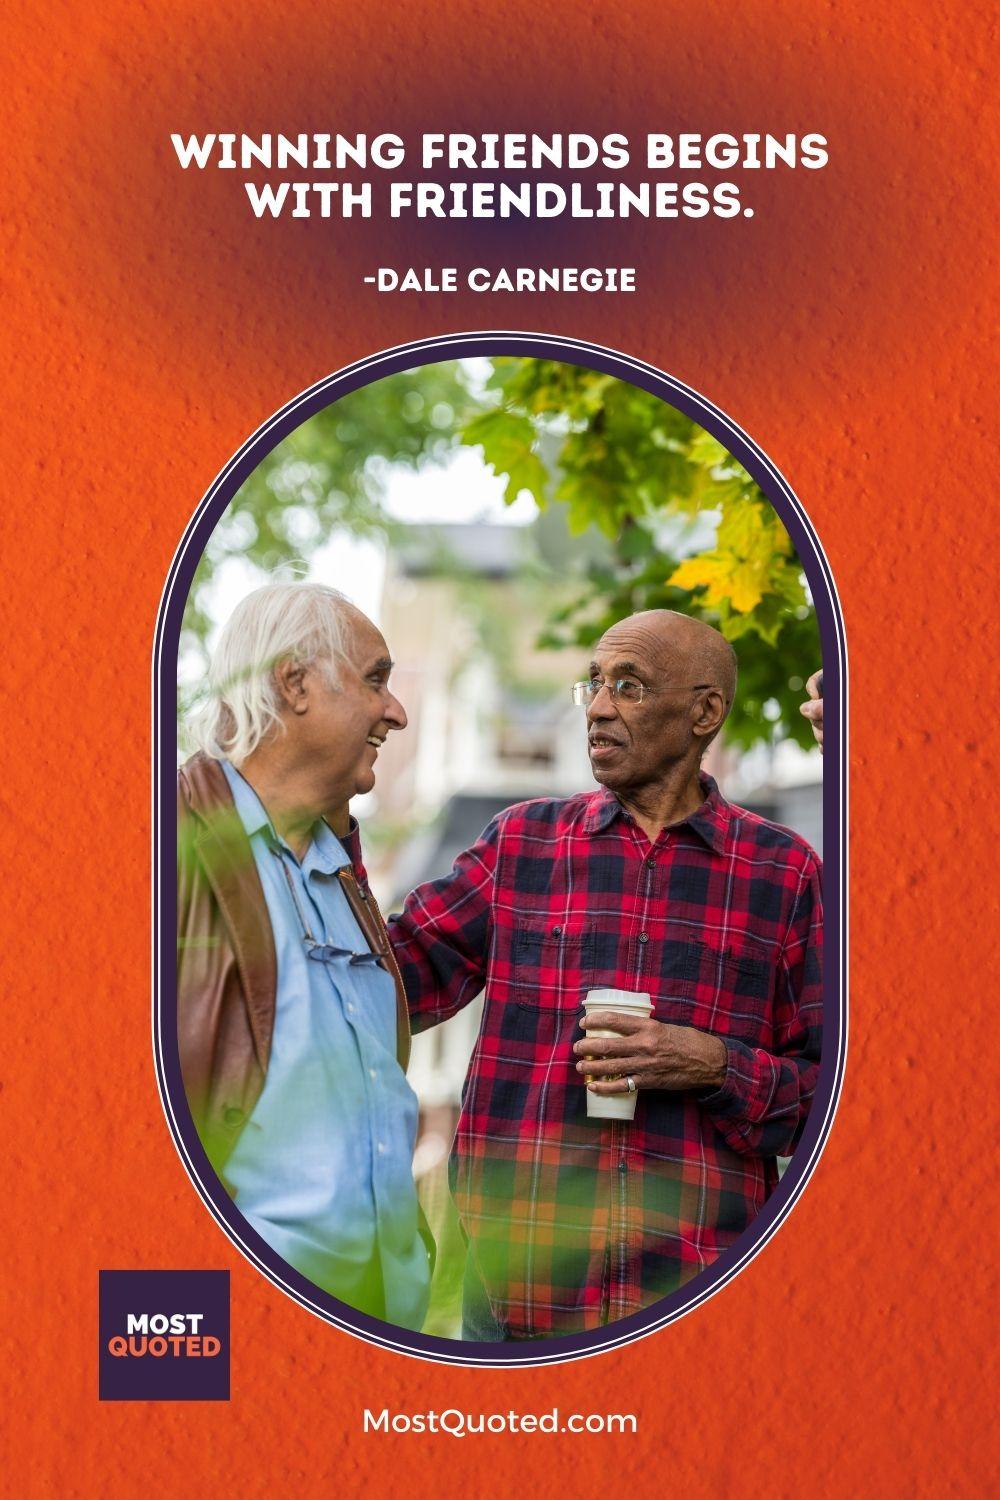 Winning friends begins with friendliness. - Dale Carnegie